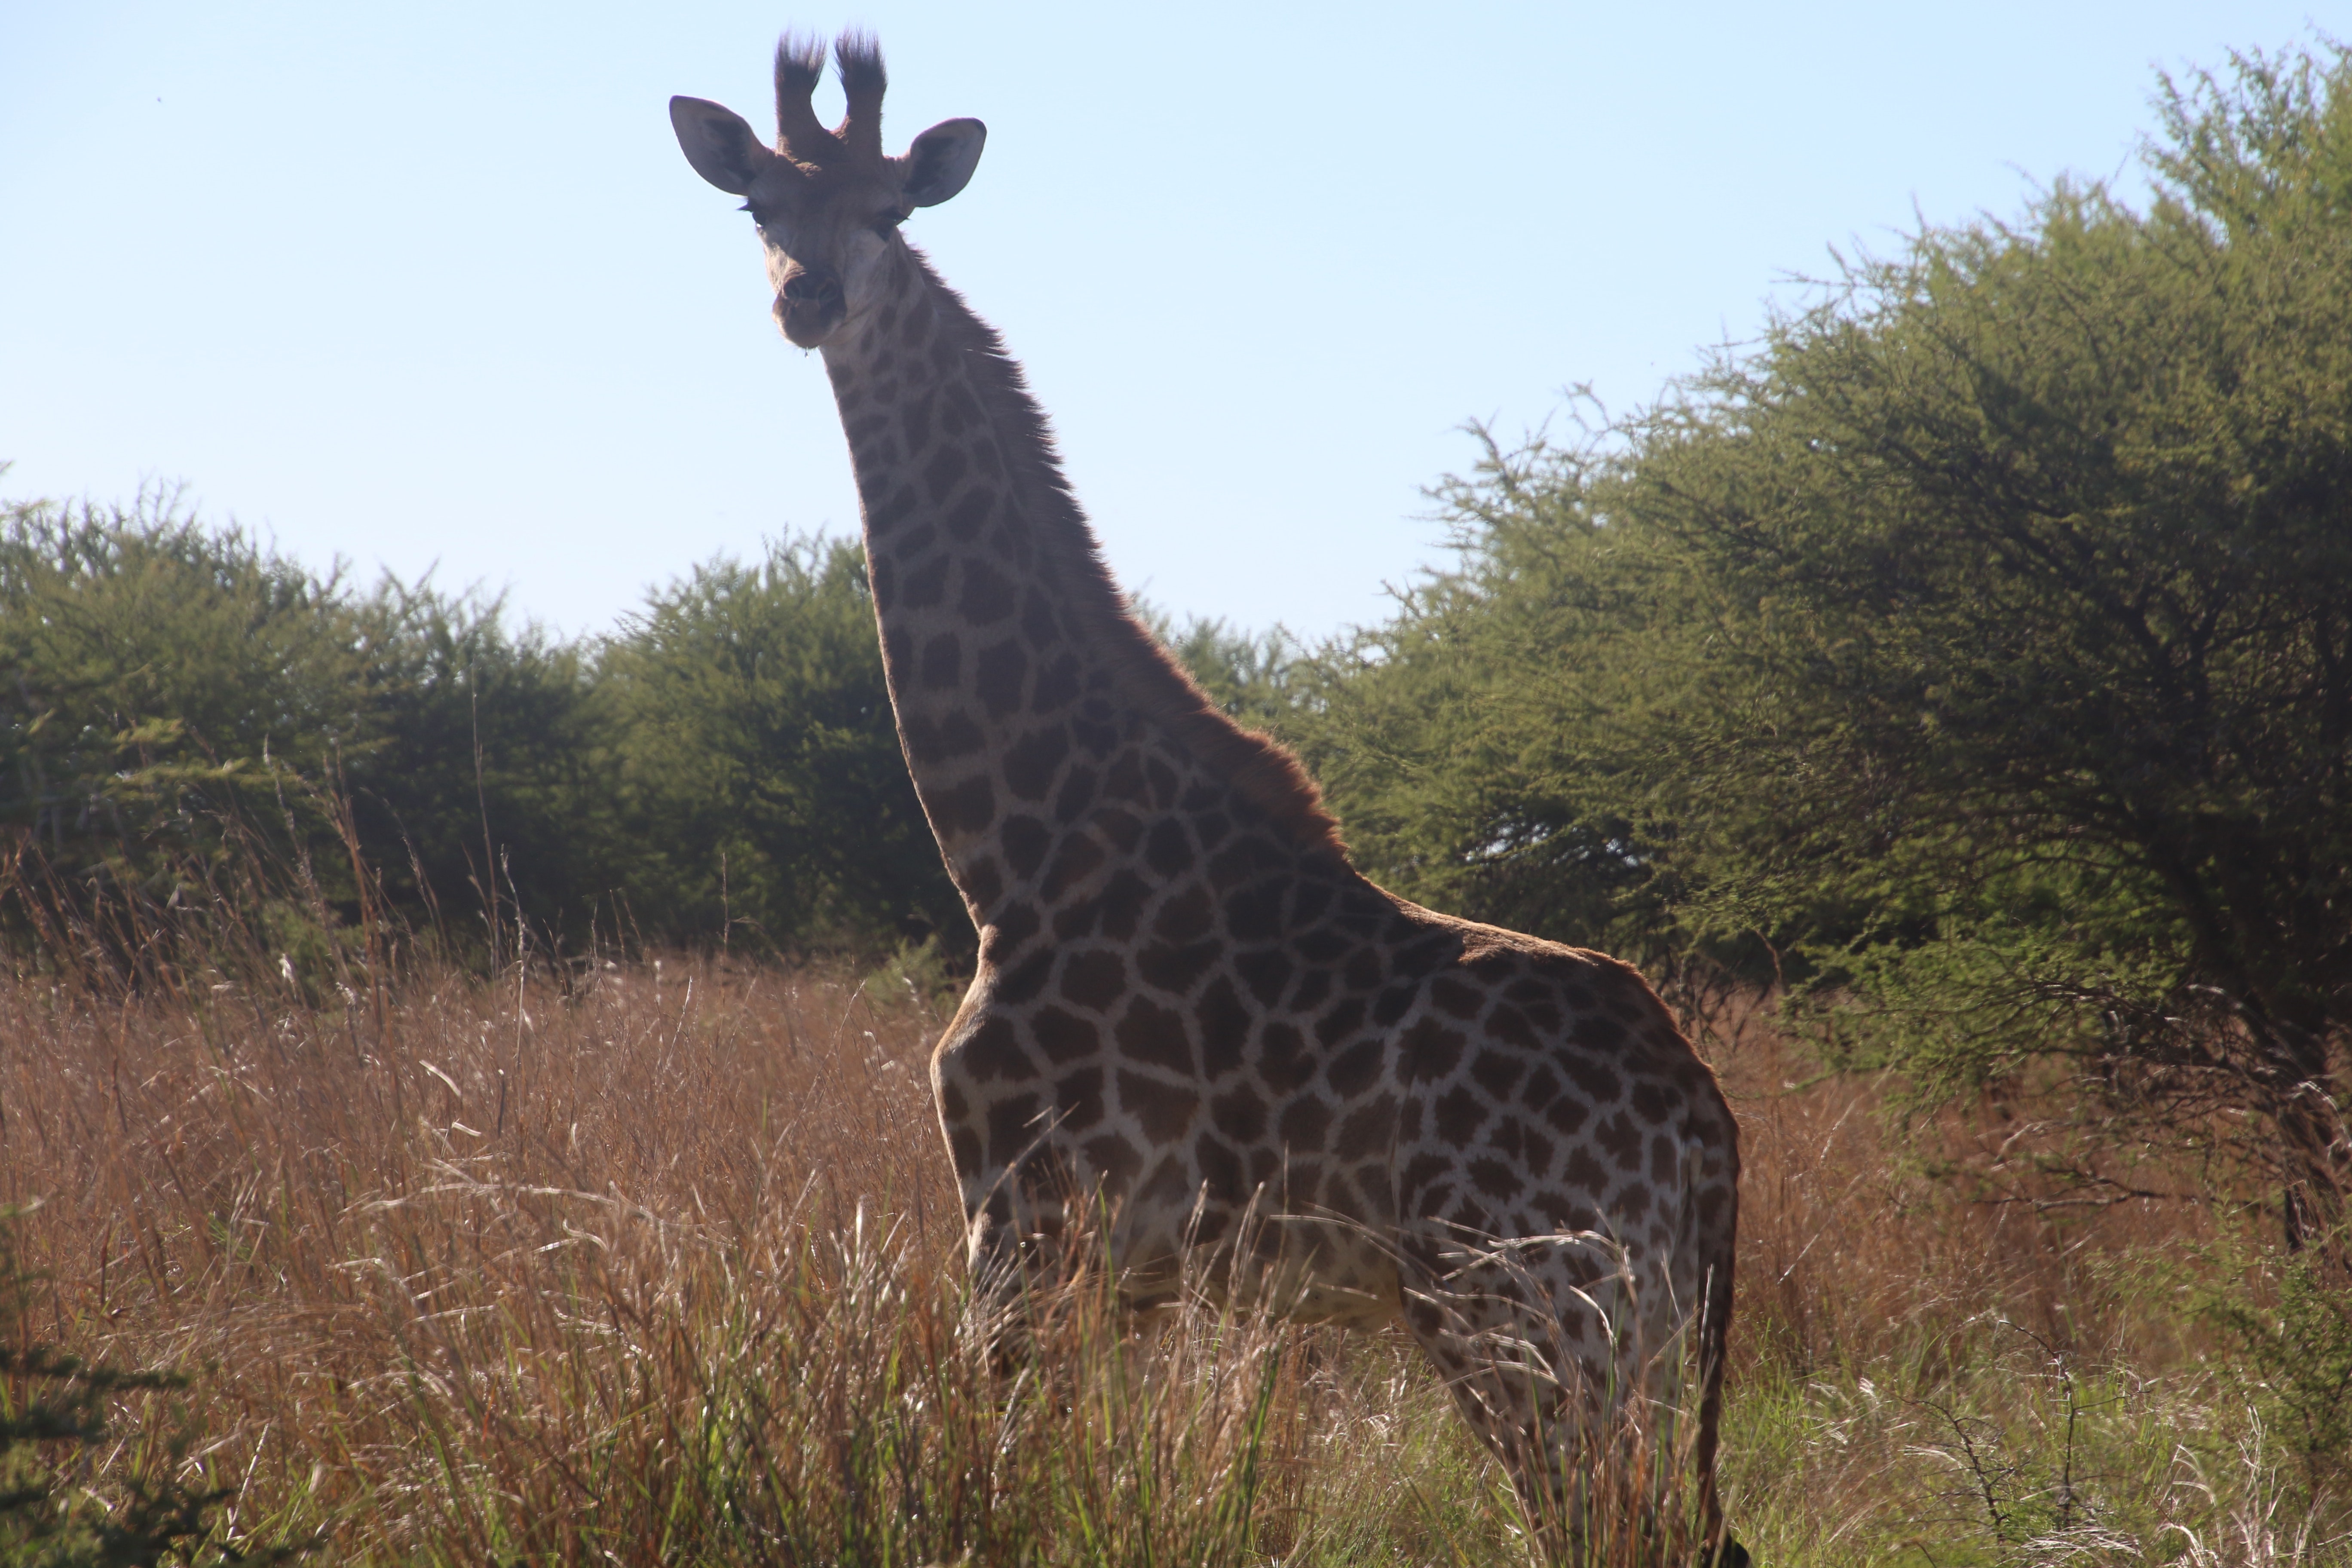 Photography of giraffe during daytime